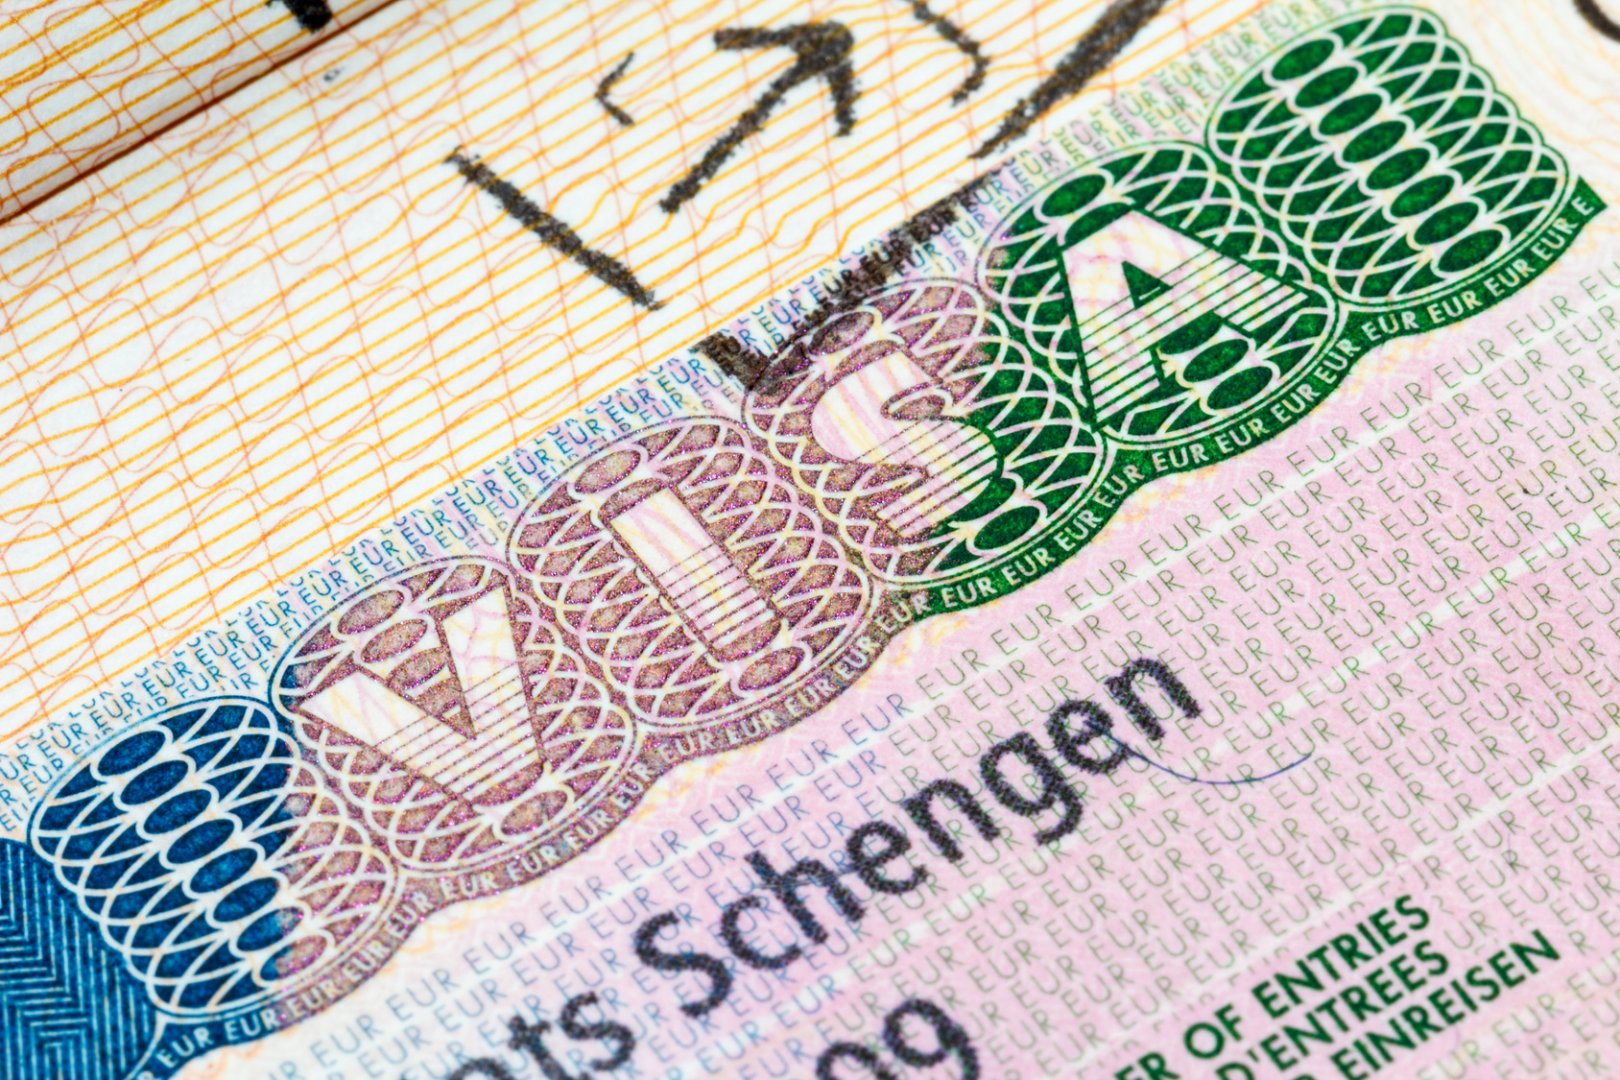 Schengen visa rejections mount for Turkish citizens